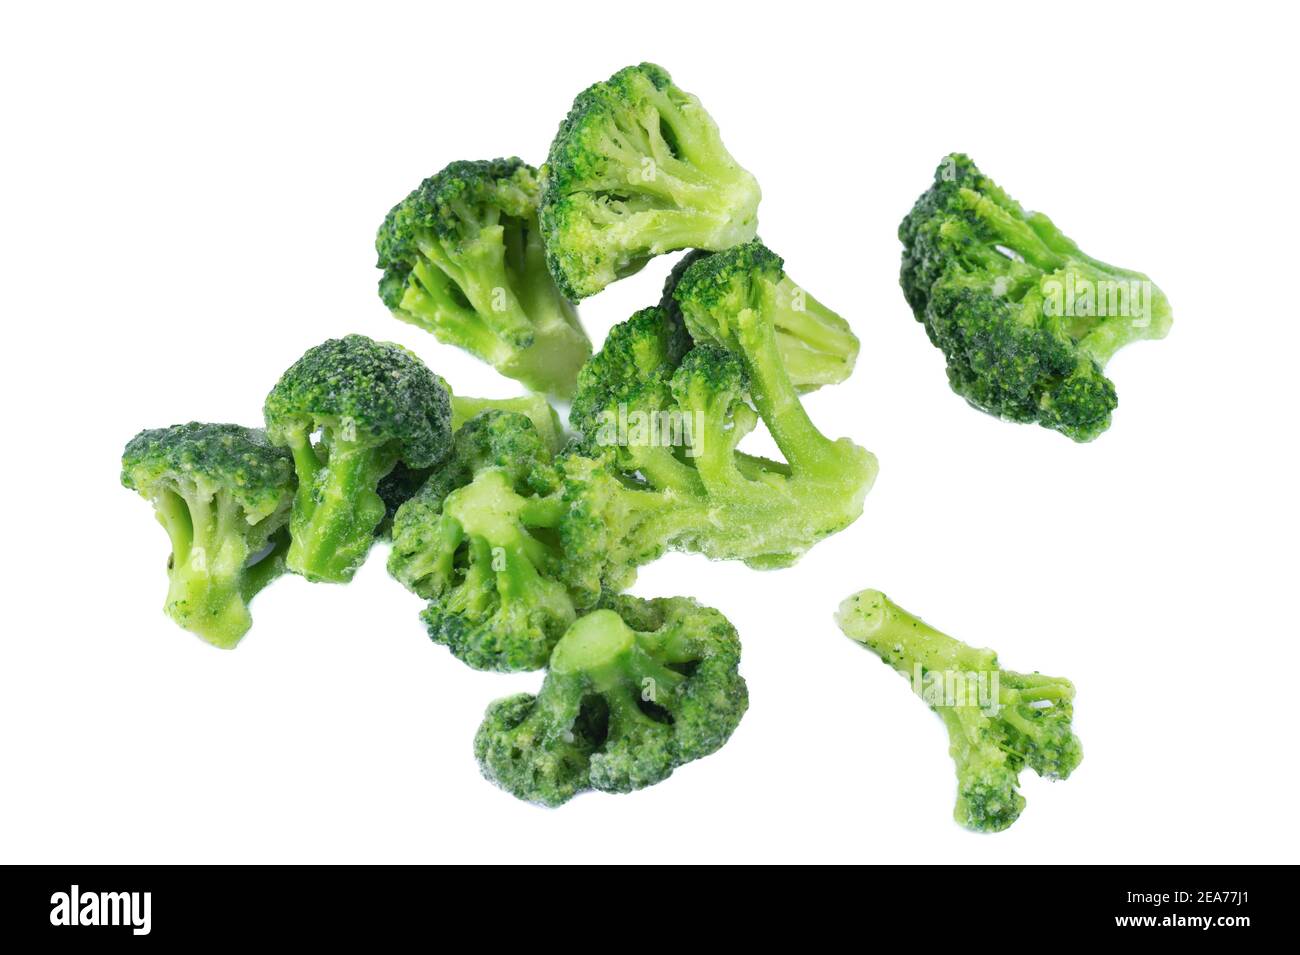 Frozen organic broccoli on white background Stock Photo